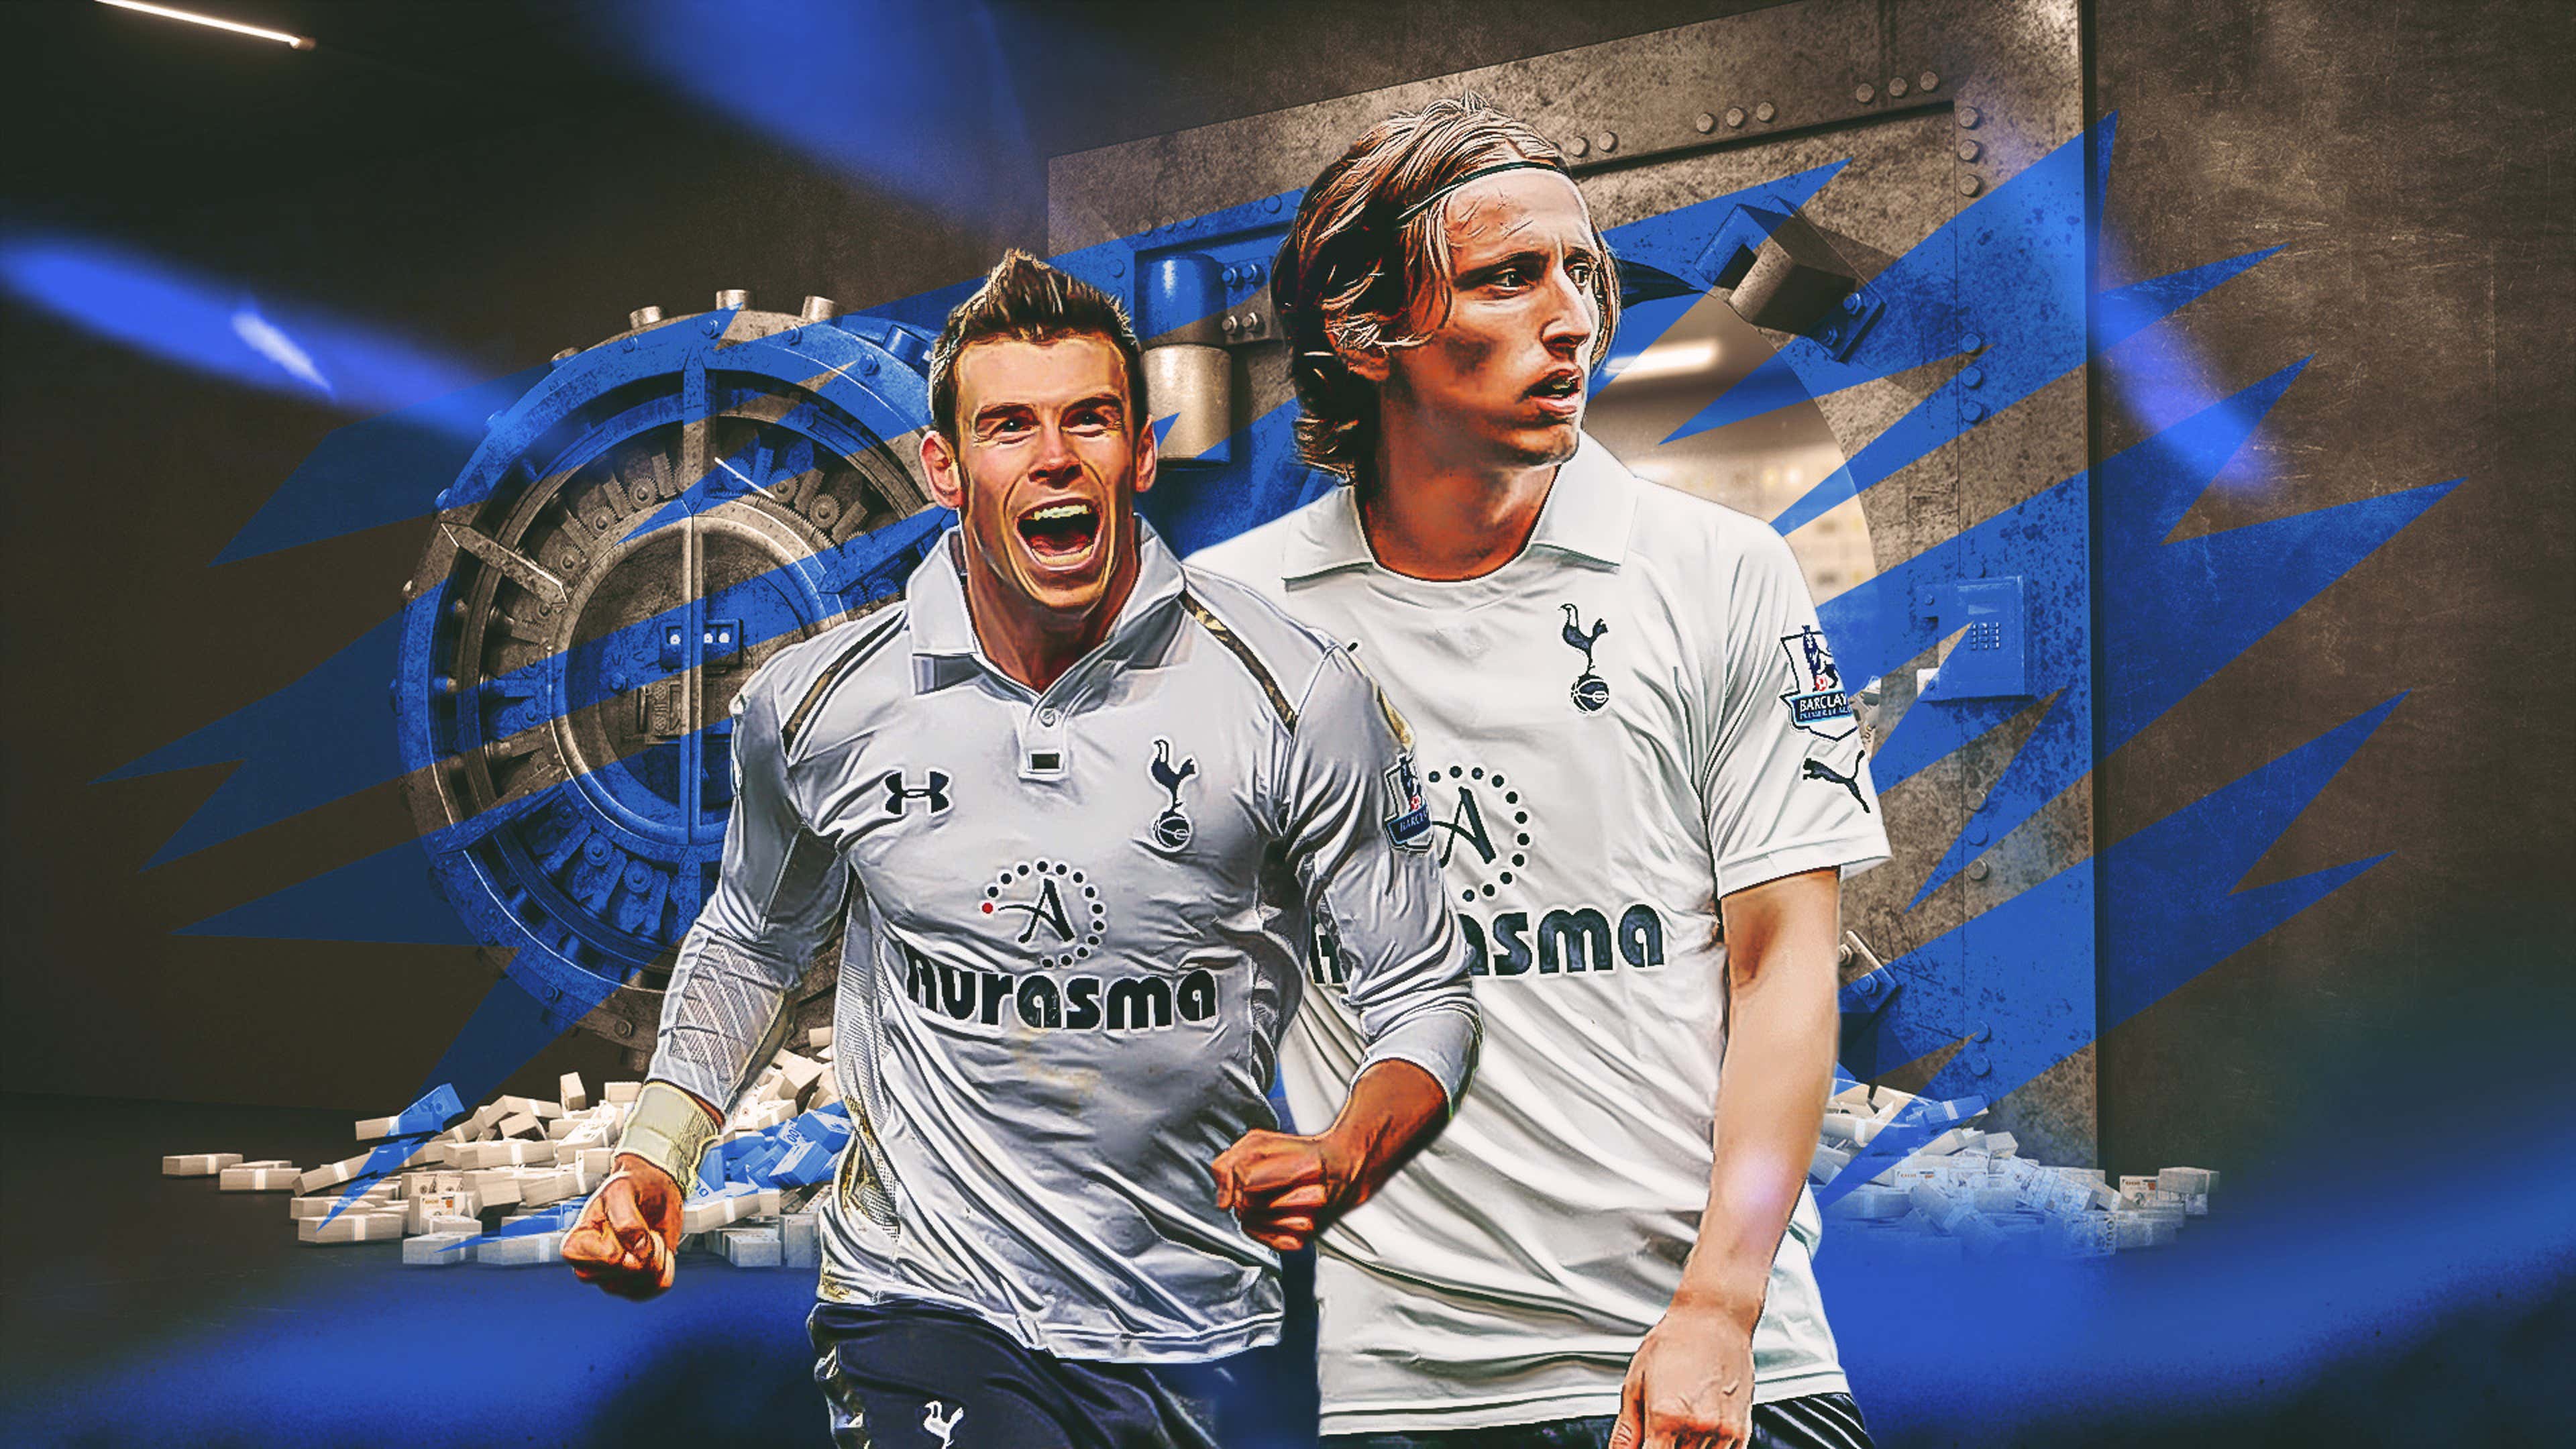 Tottenham Hotspur - The Story of 2013/14 